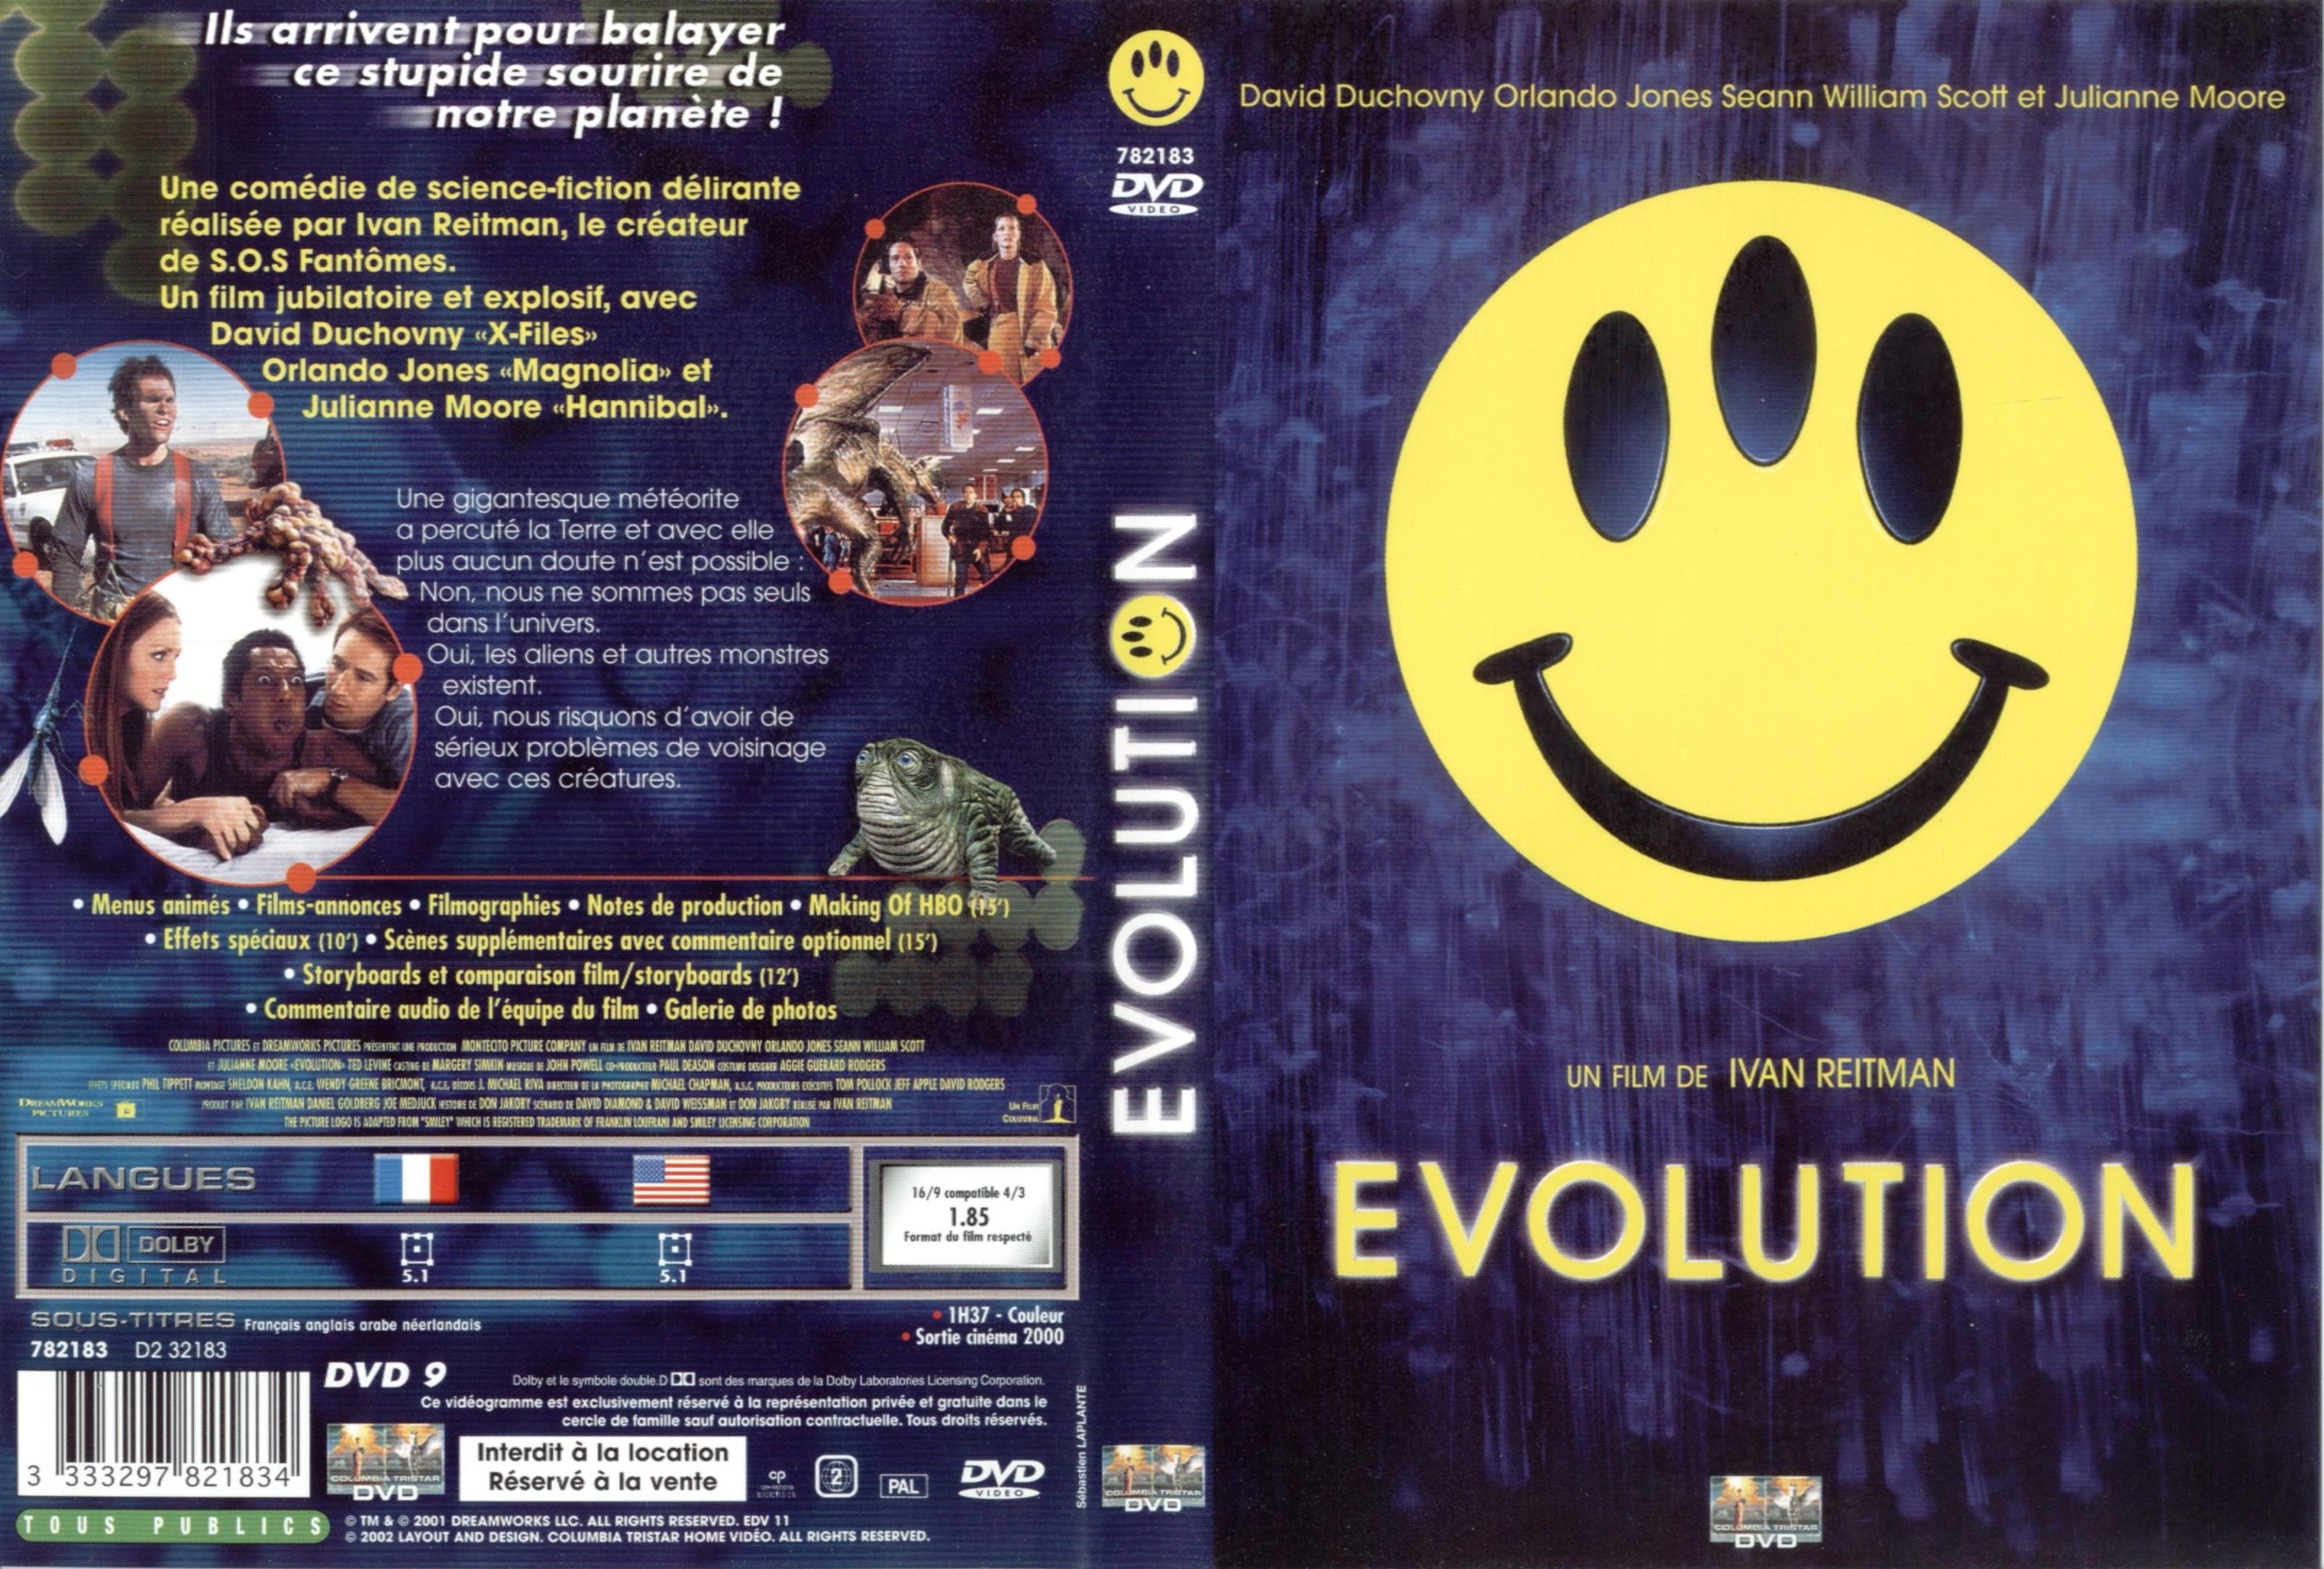 Jaquette DVD Evolution